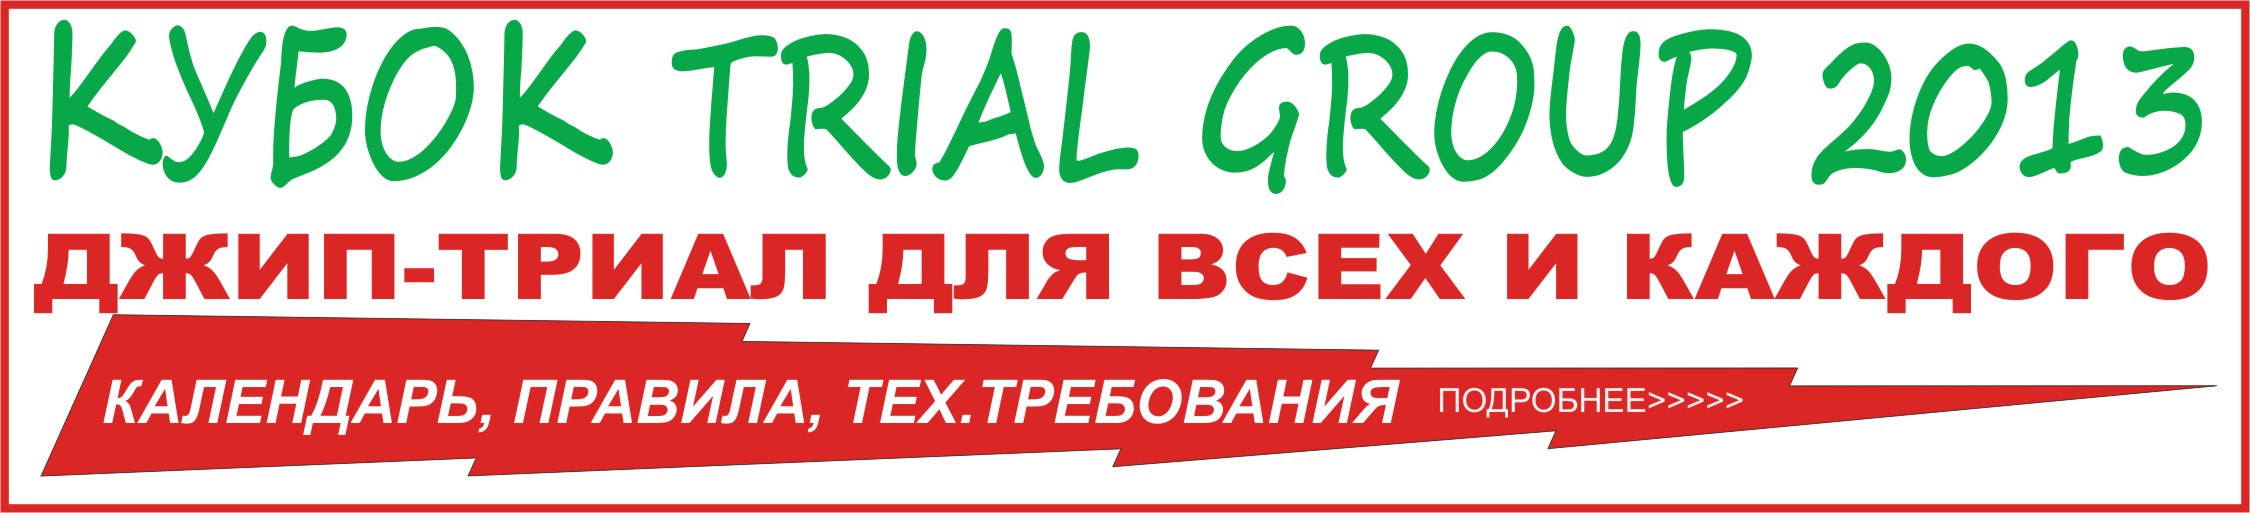 Подробнее о Кубке TRIAL GROUP 2013